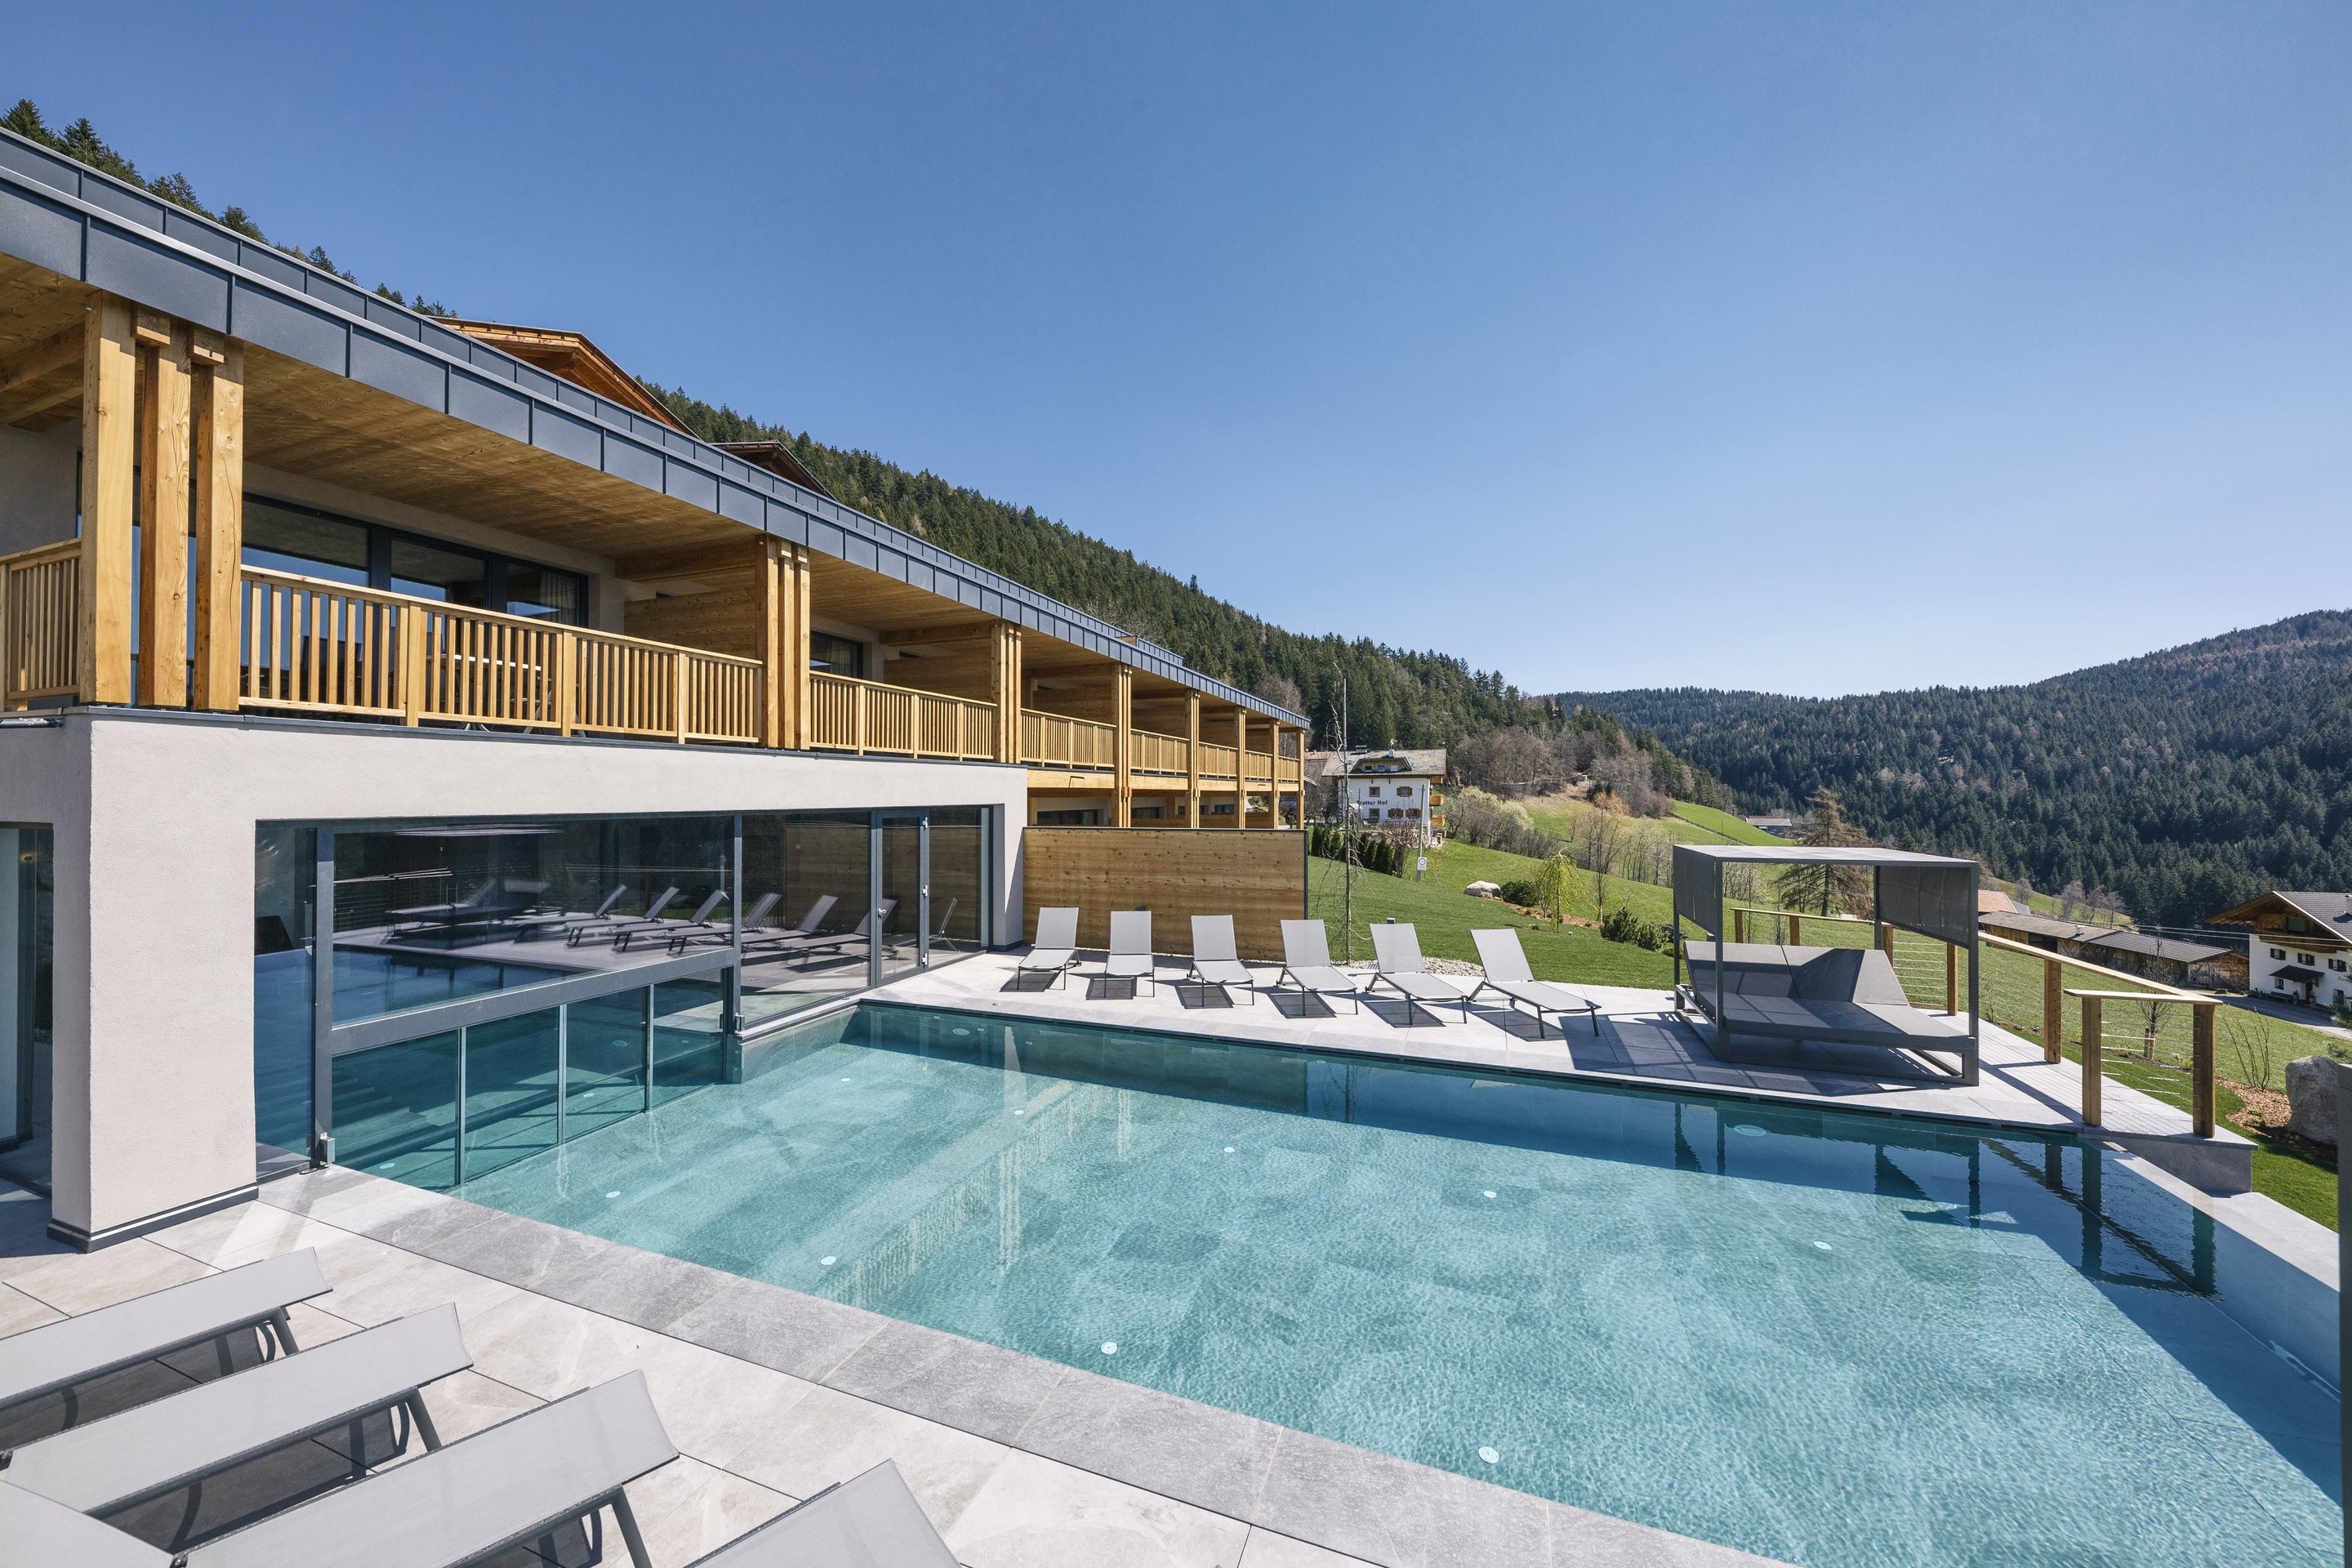 Ihr Hotel mit Infinity-Pool in Südtirol: Hotel Avelina